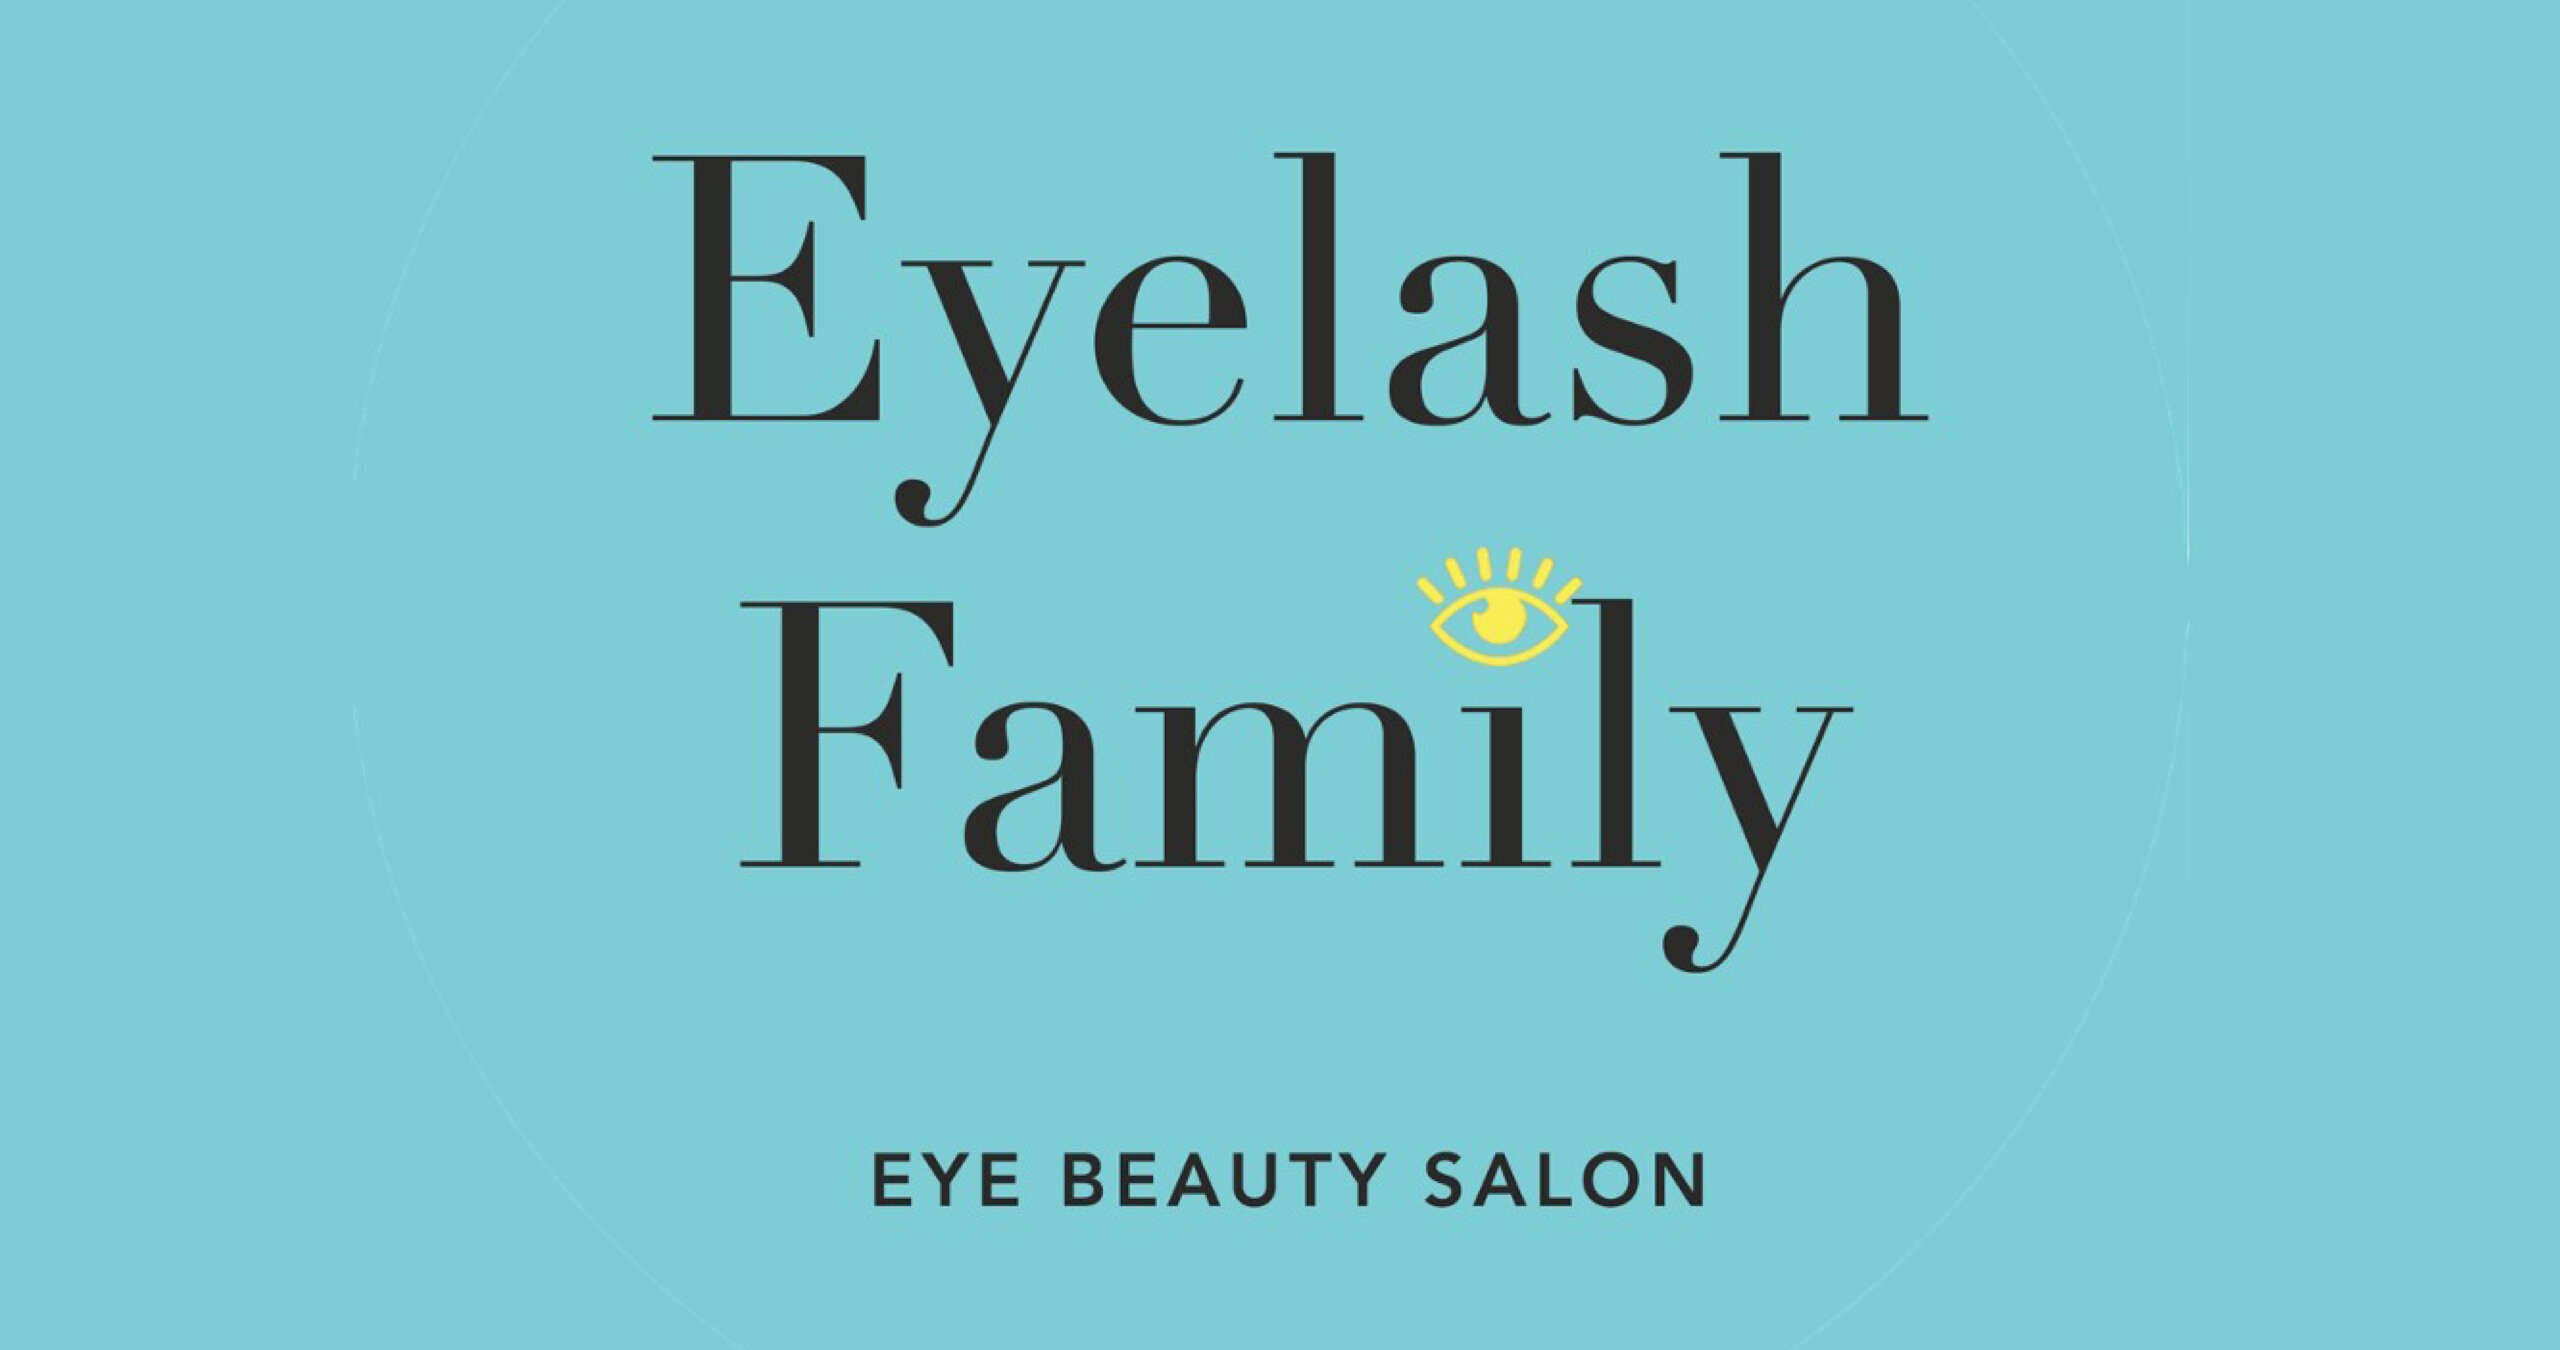 Eyelash Family